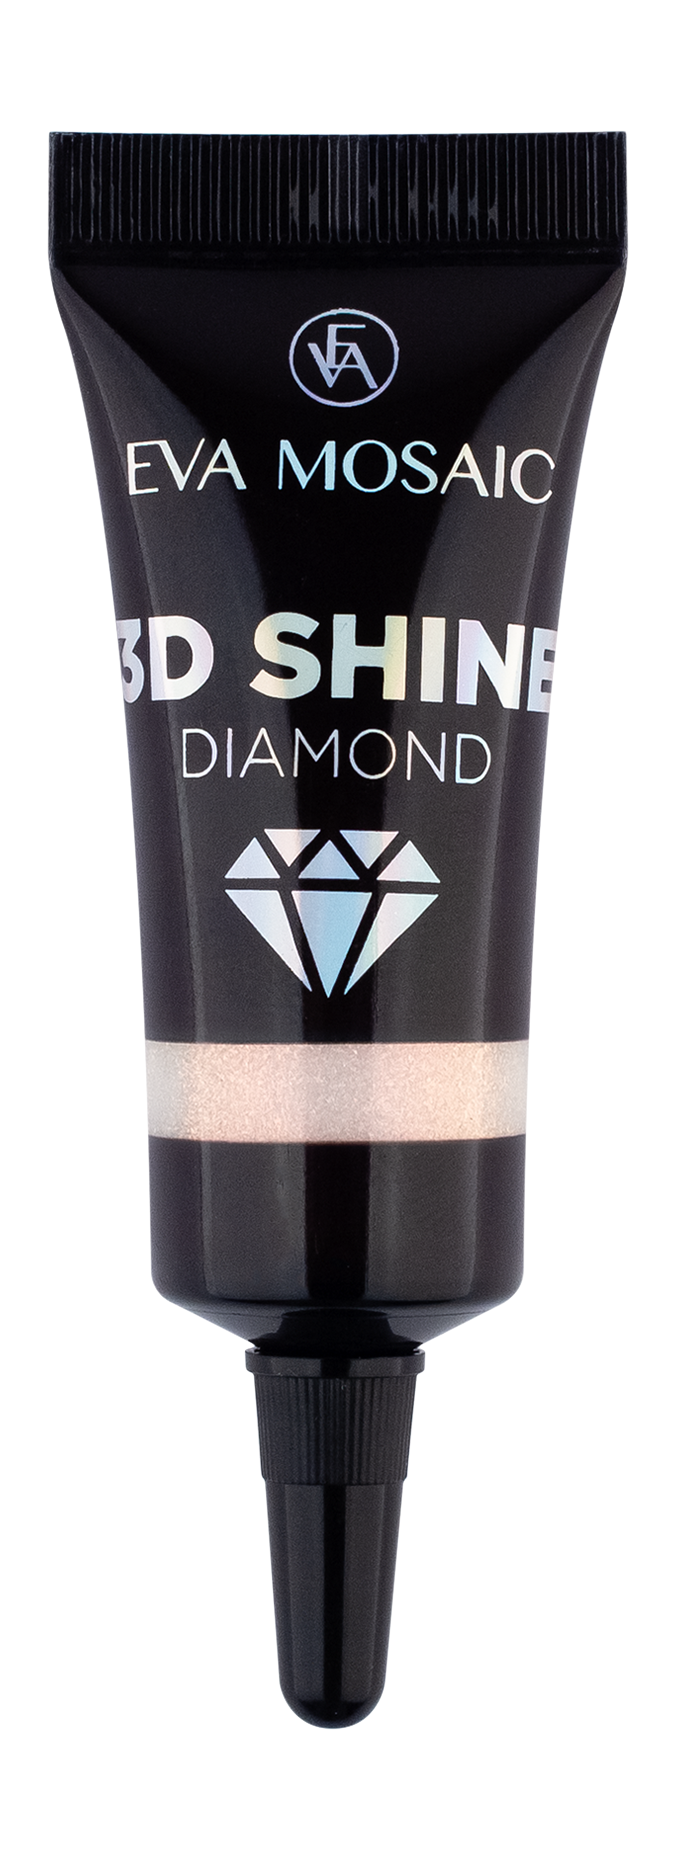 EVA MOSAIC Глиттер для лица 3D Shine Diamond гелевый, 7 мл, Розовое золото